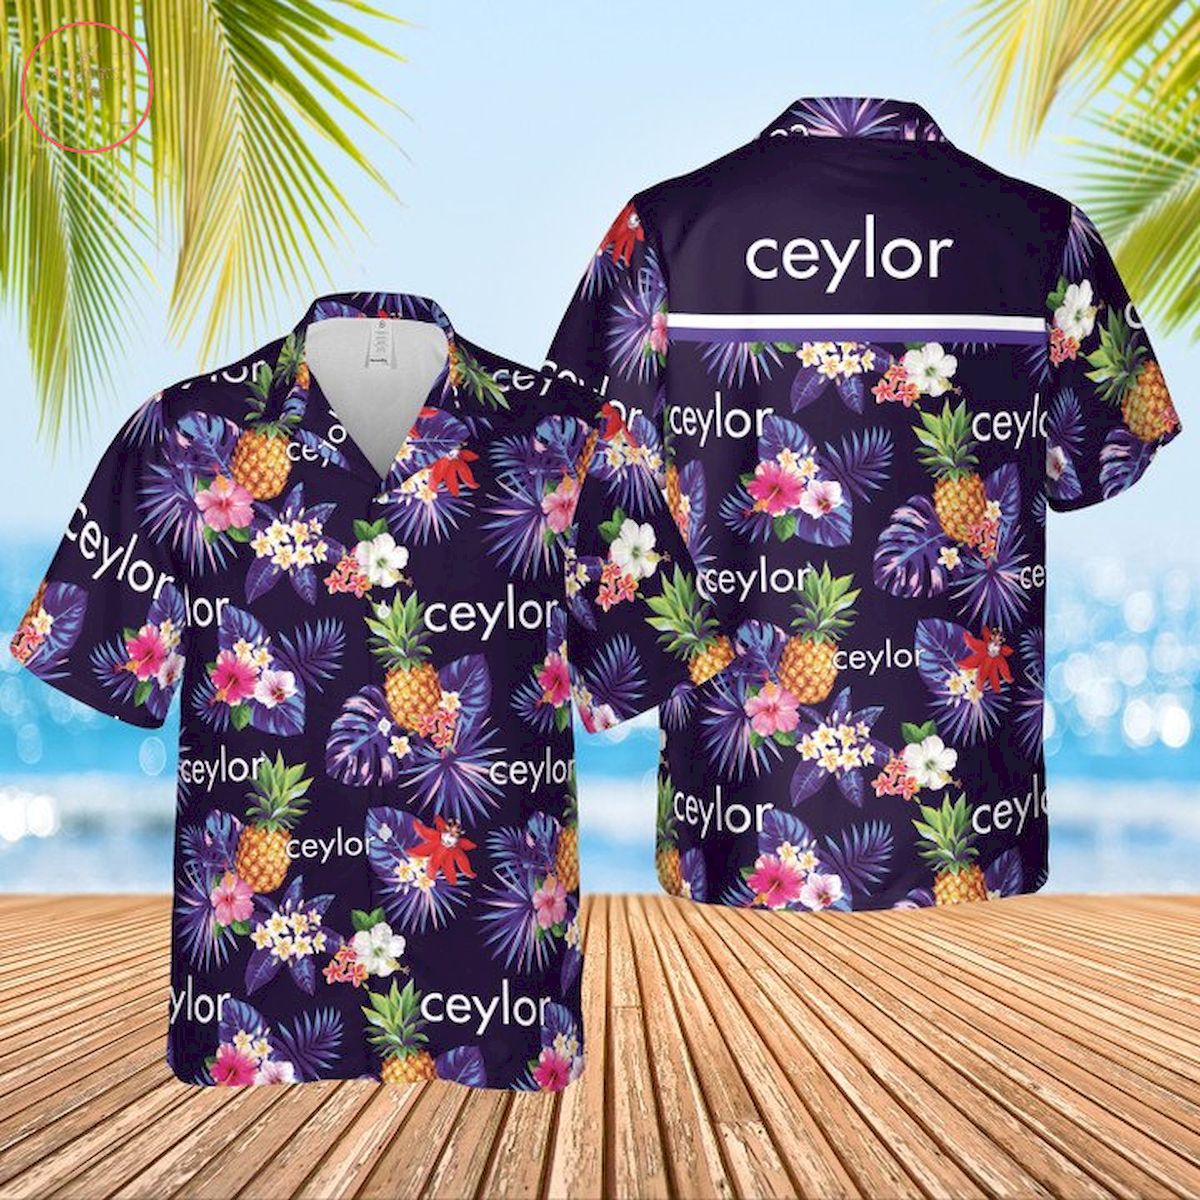 Ceylor Condoms Hawaiian Shirt and Shorts